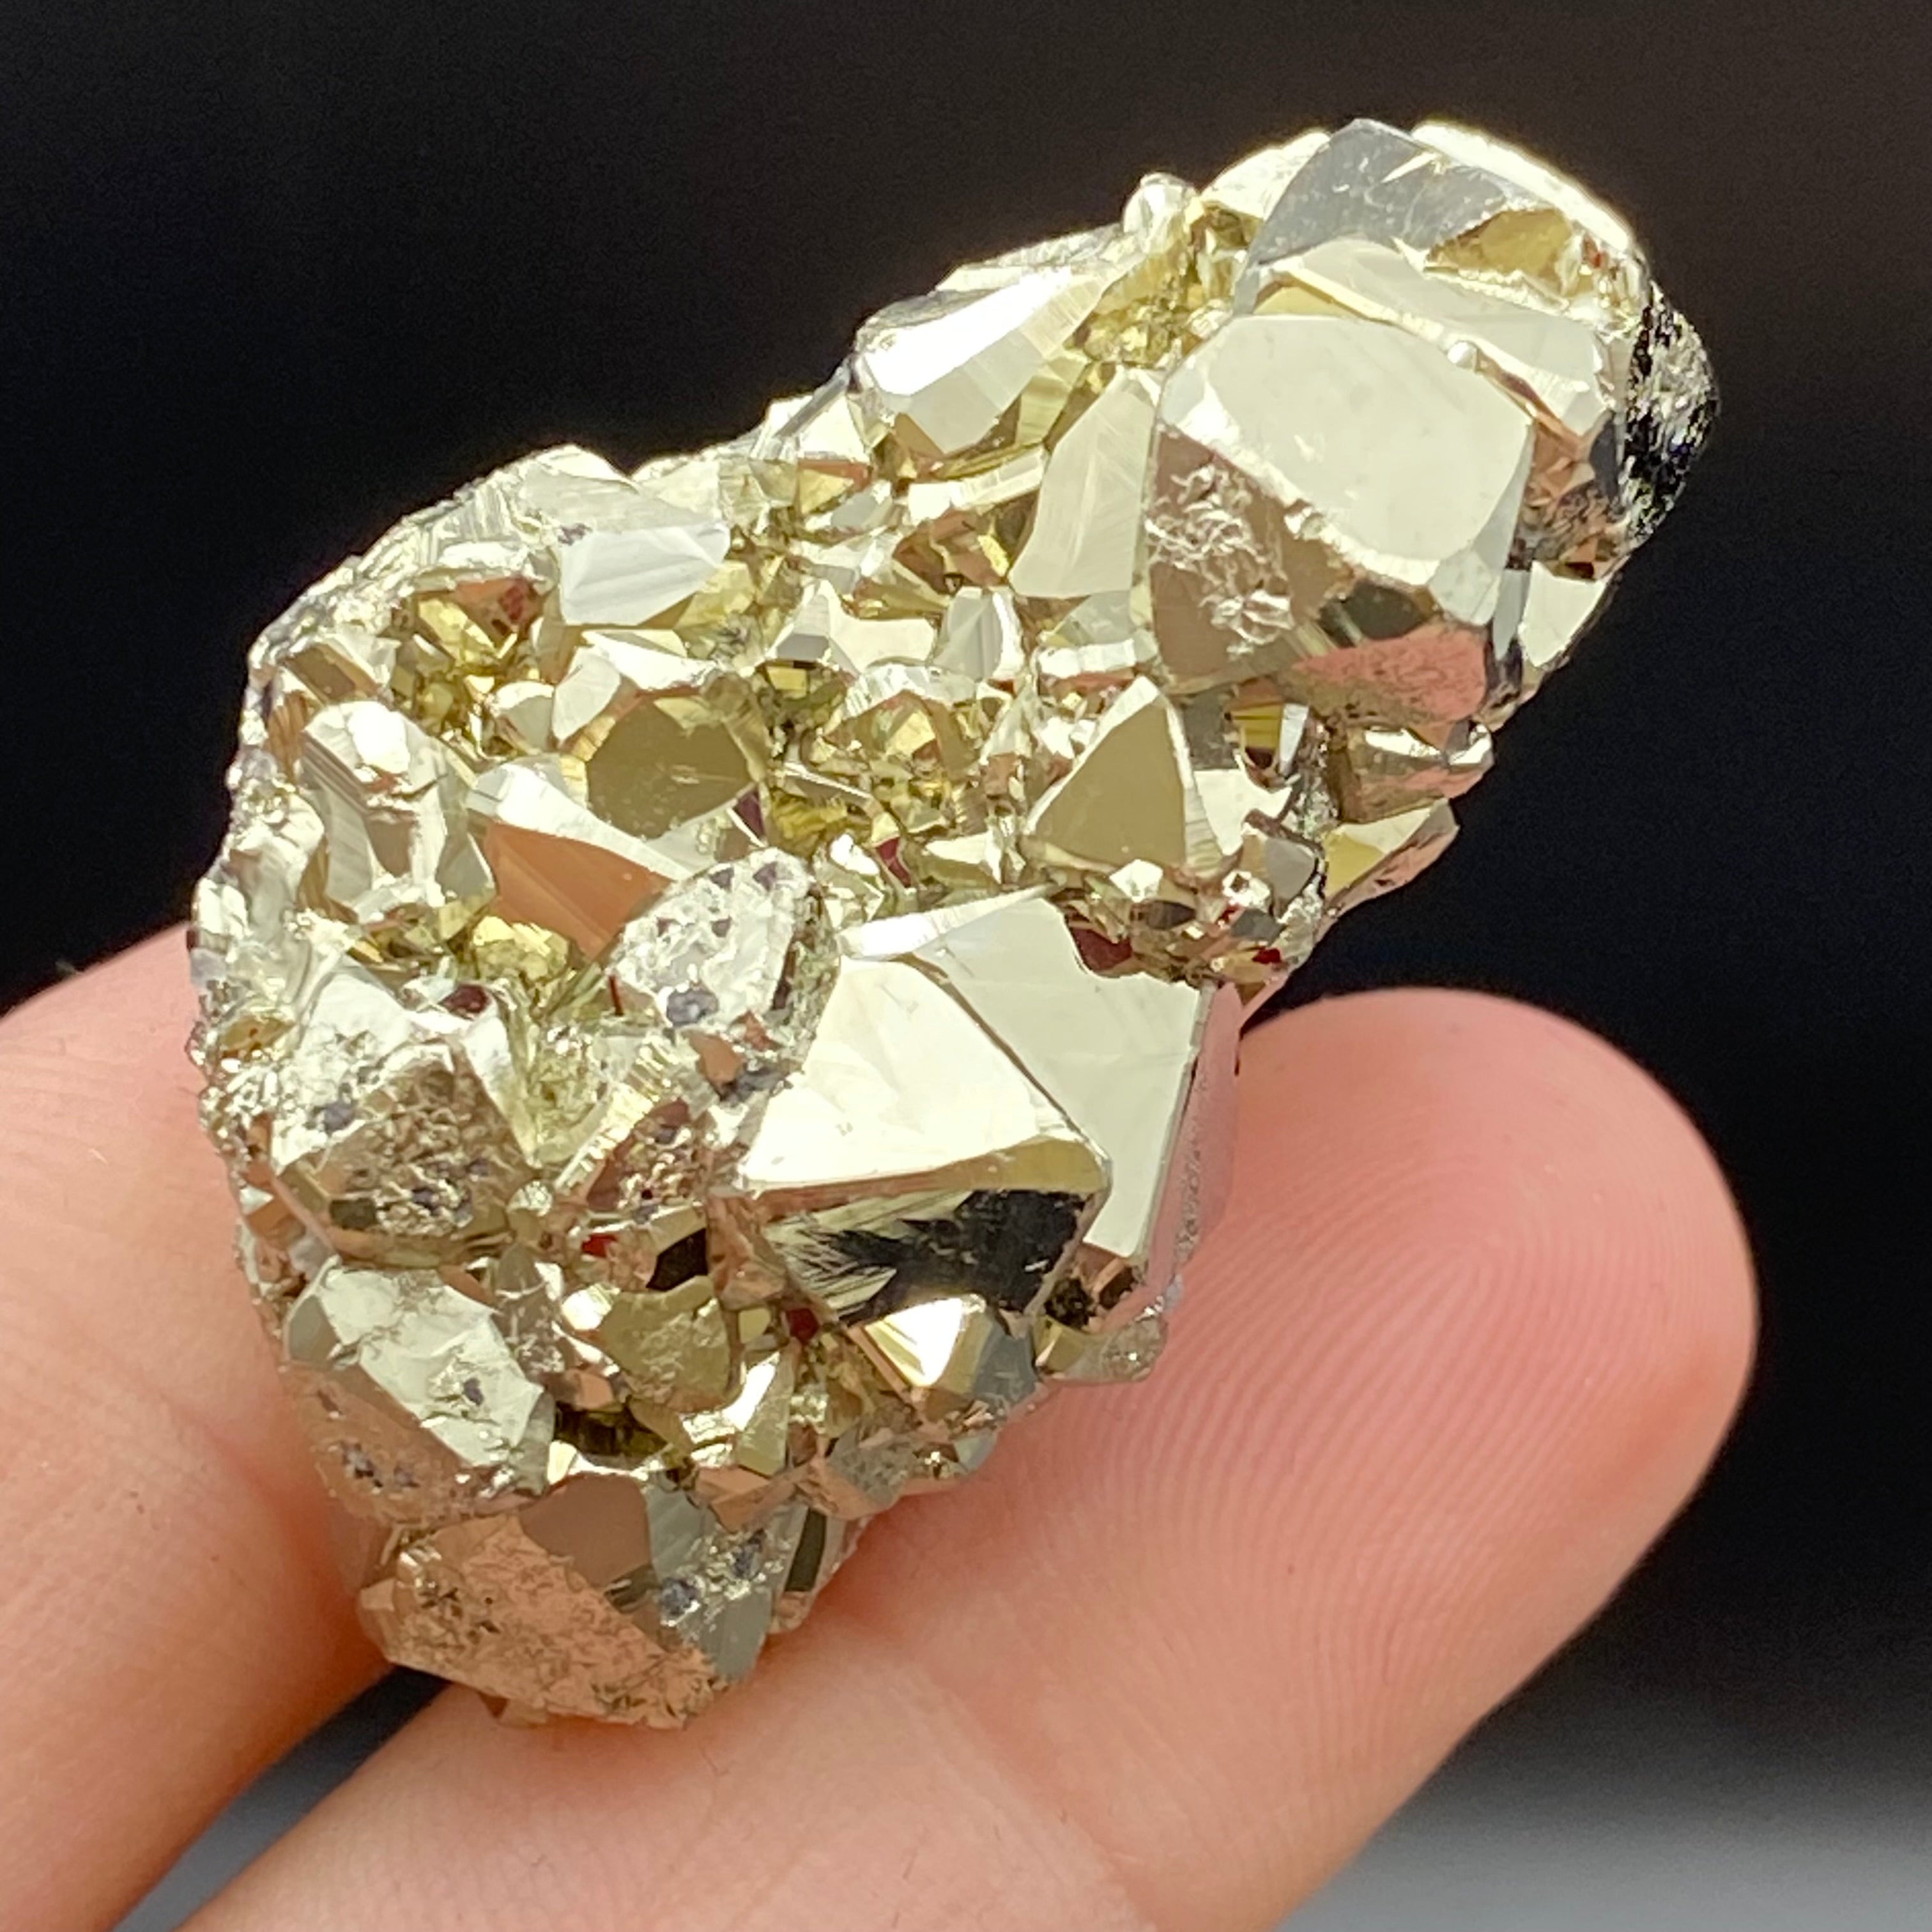 Peruvian Pyrite Crystal - 015